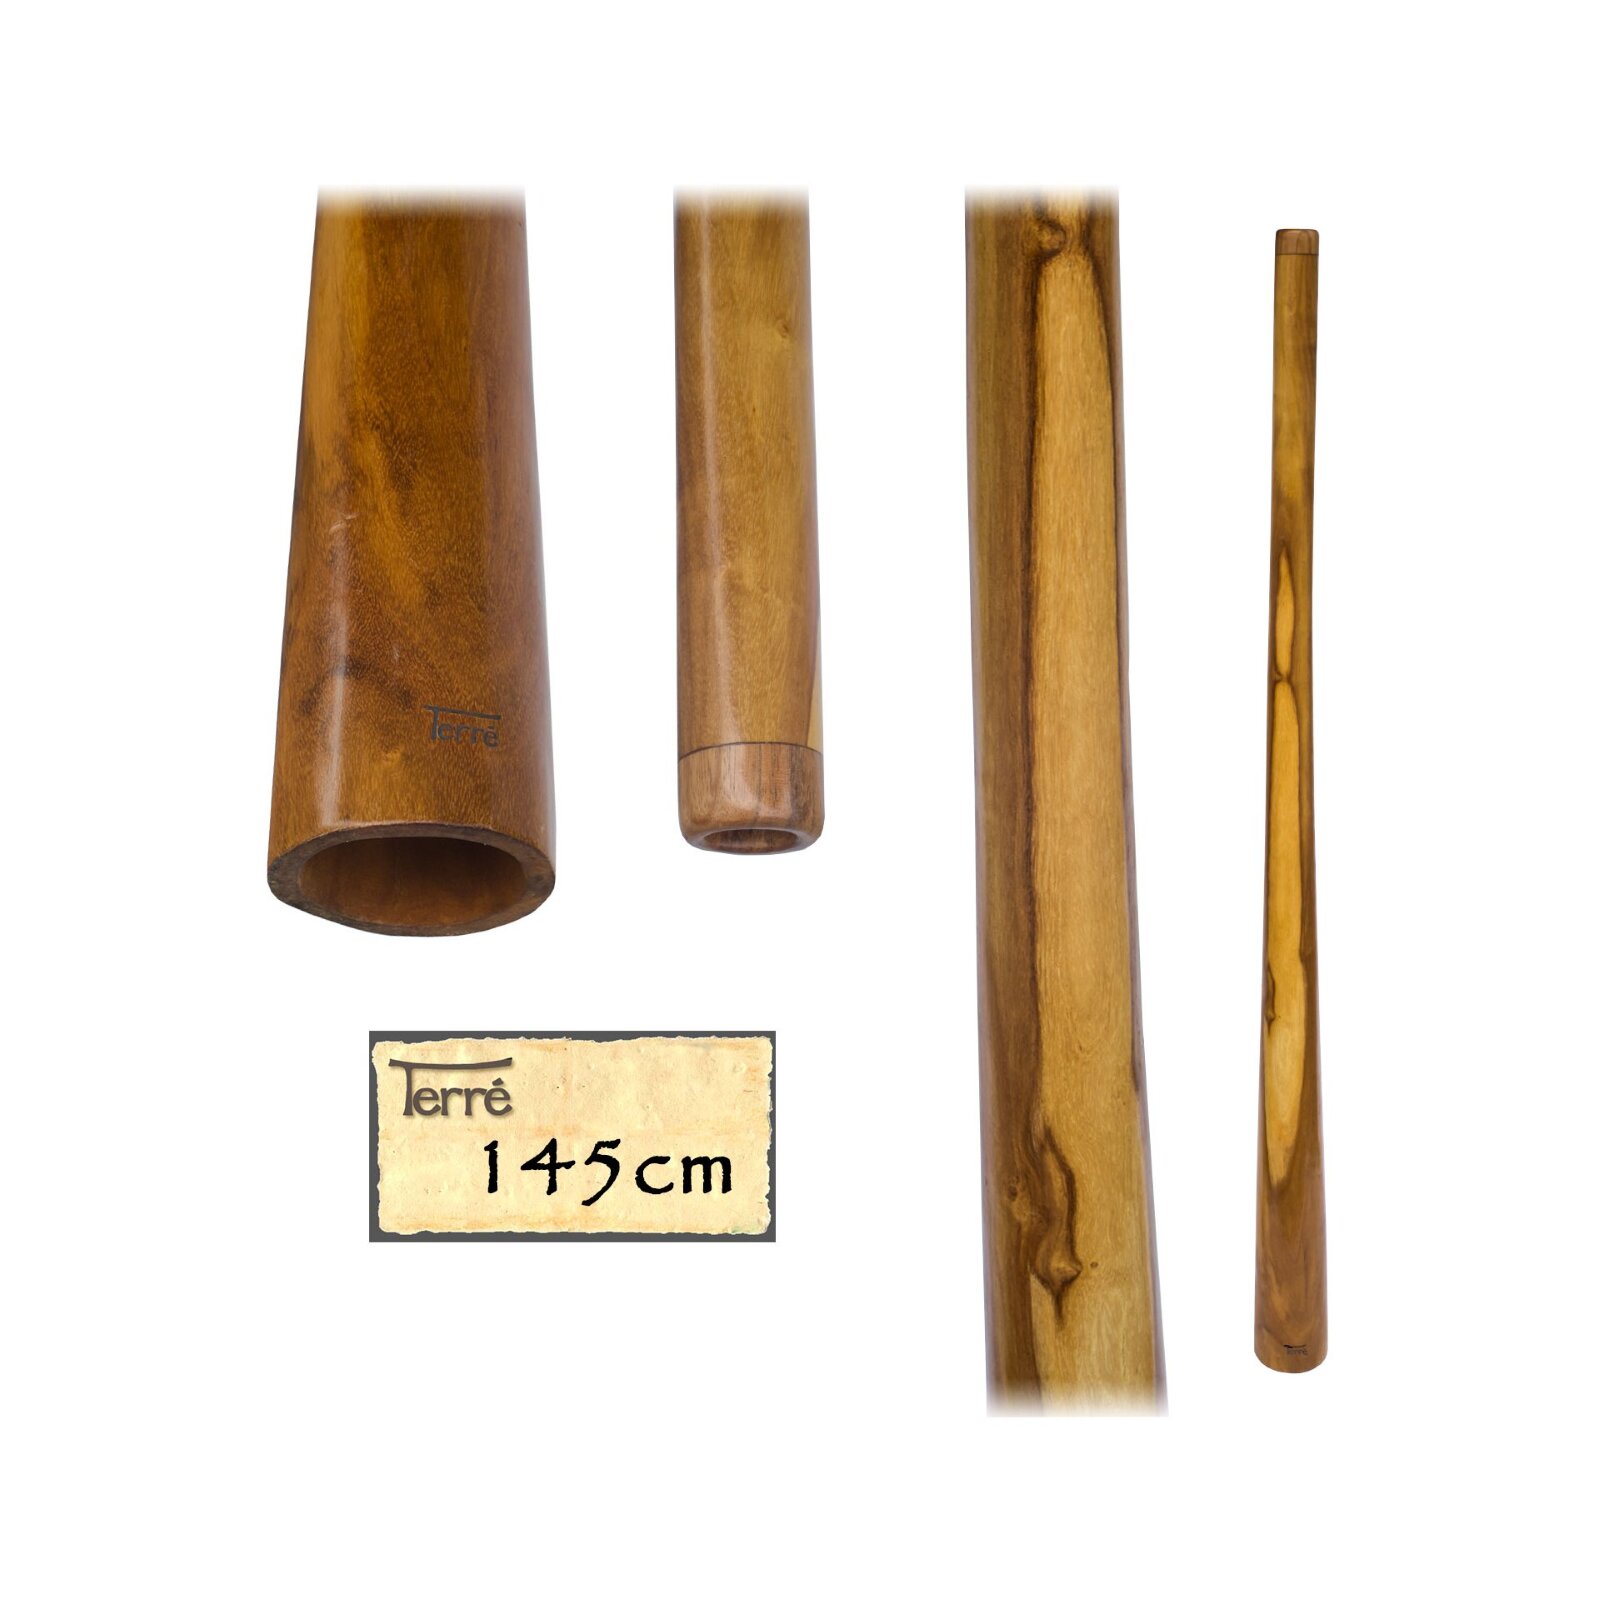 Erde Eukalyptus Didgeridoo 140-150cm : photo 1